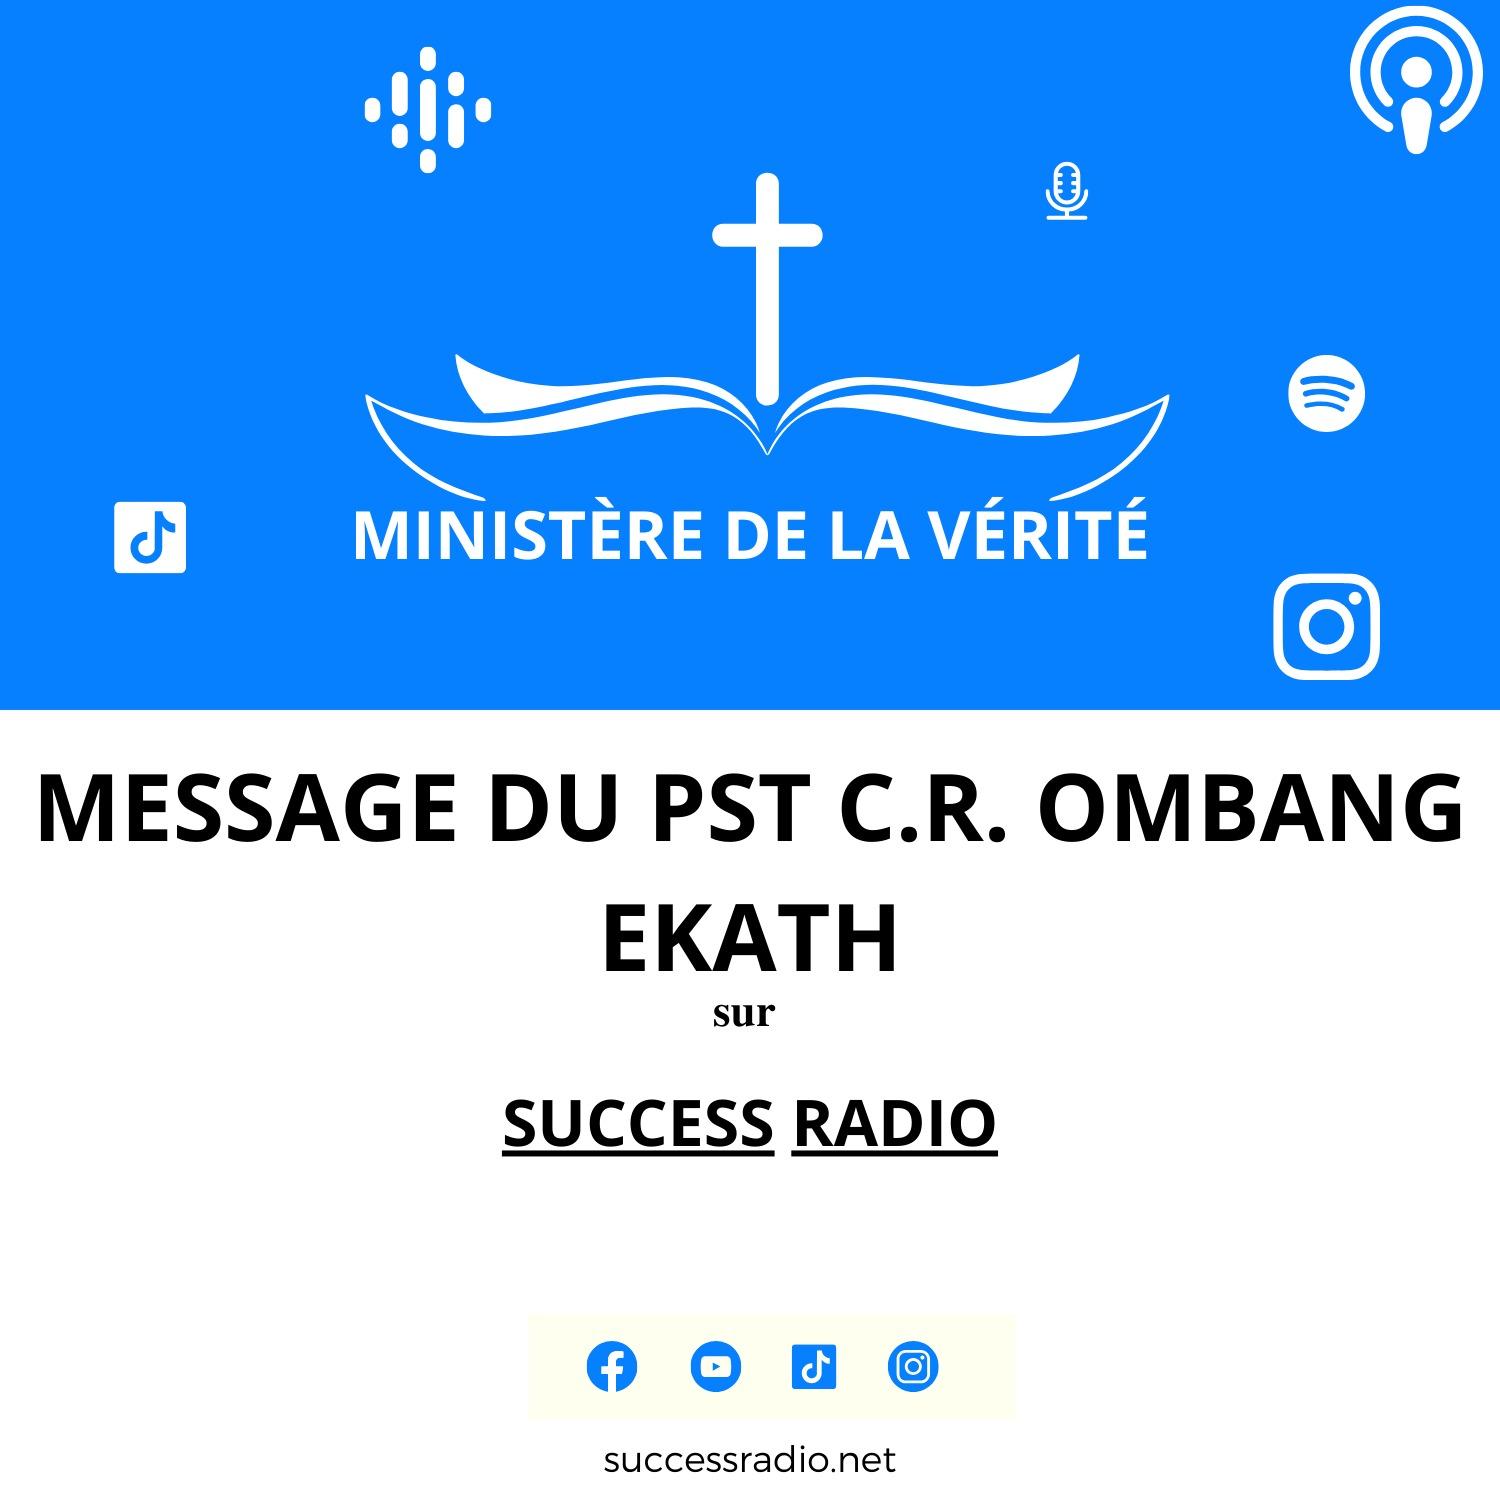 Message du Rev C.R OMBANG EKATH